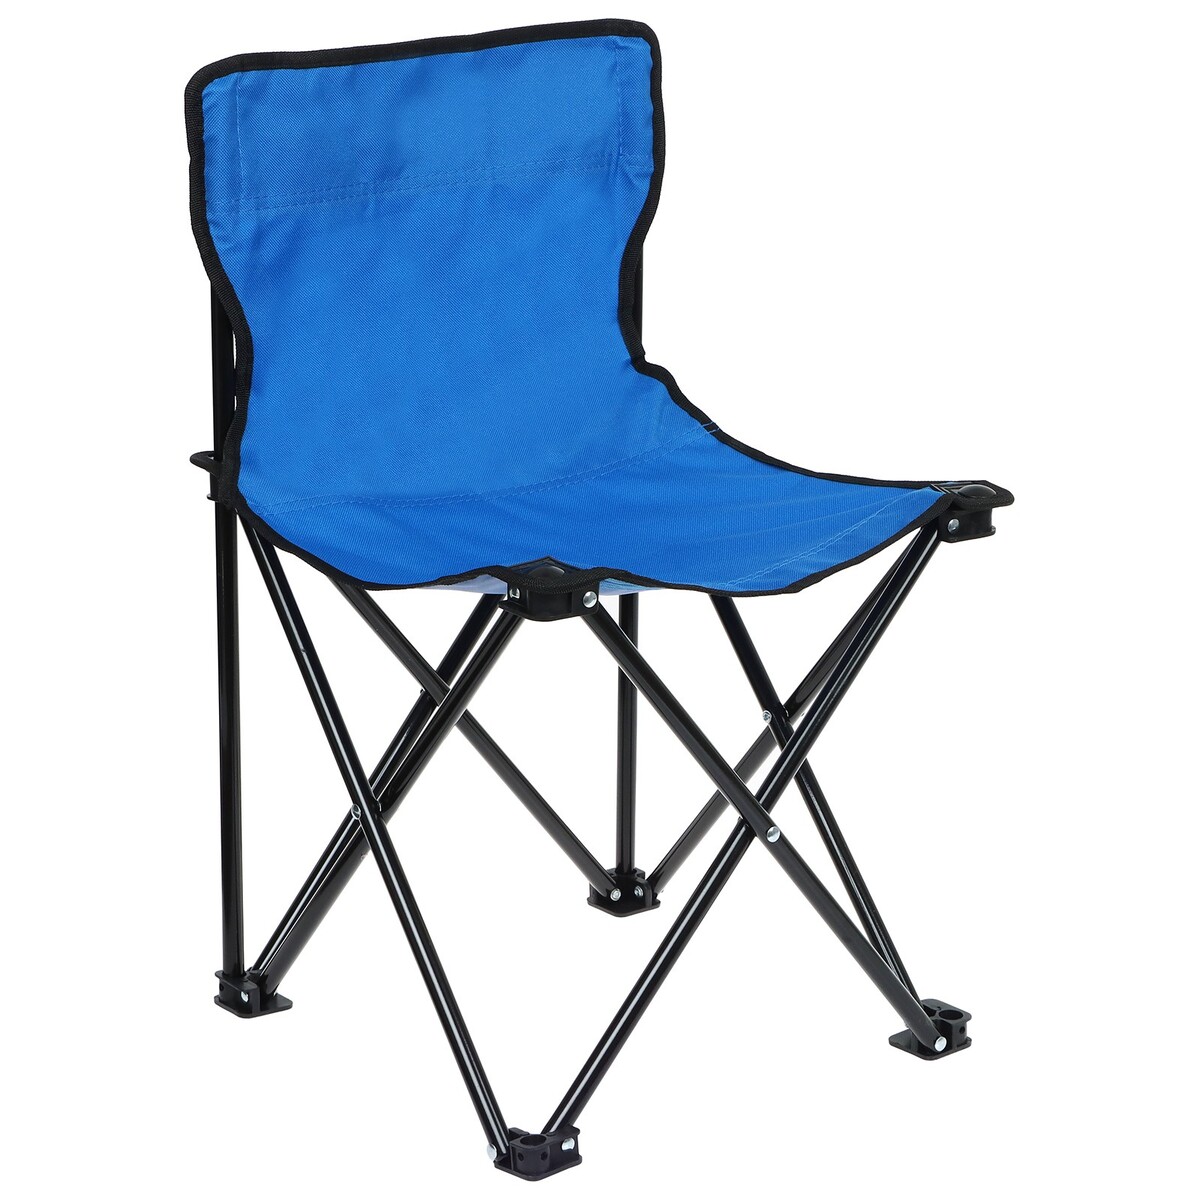 Кресло туристическое, складное, до 80 кг, размер 35 х 35 х 56 см, цвет синий Maclay 02005665 - фото 5